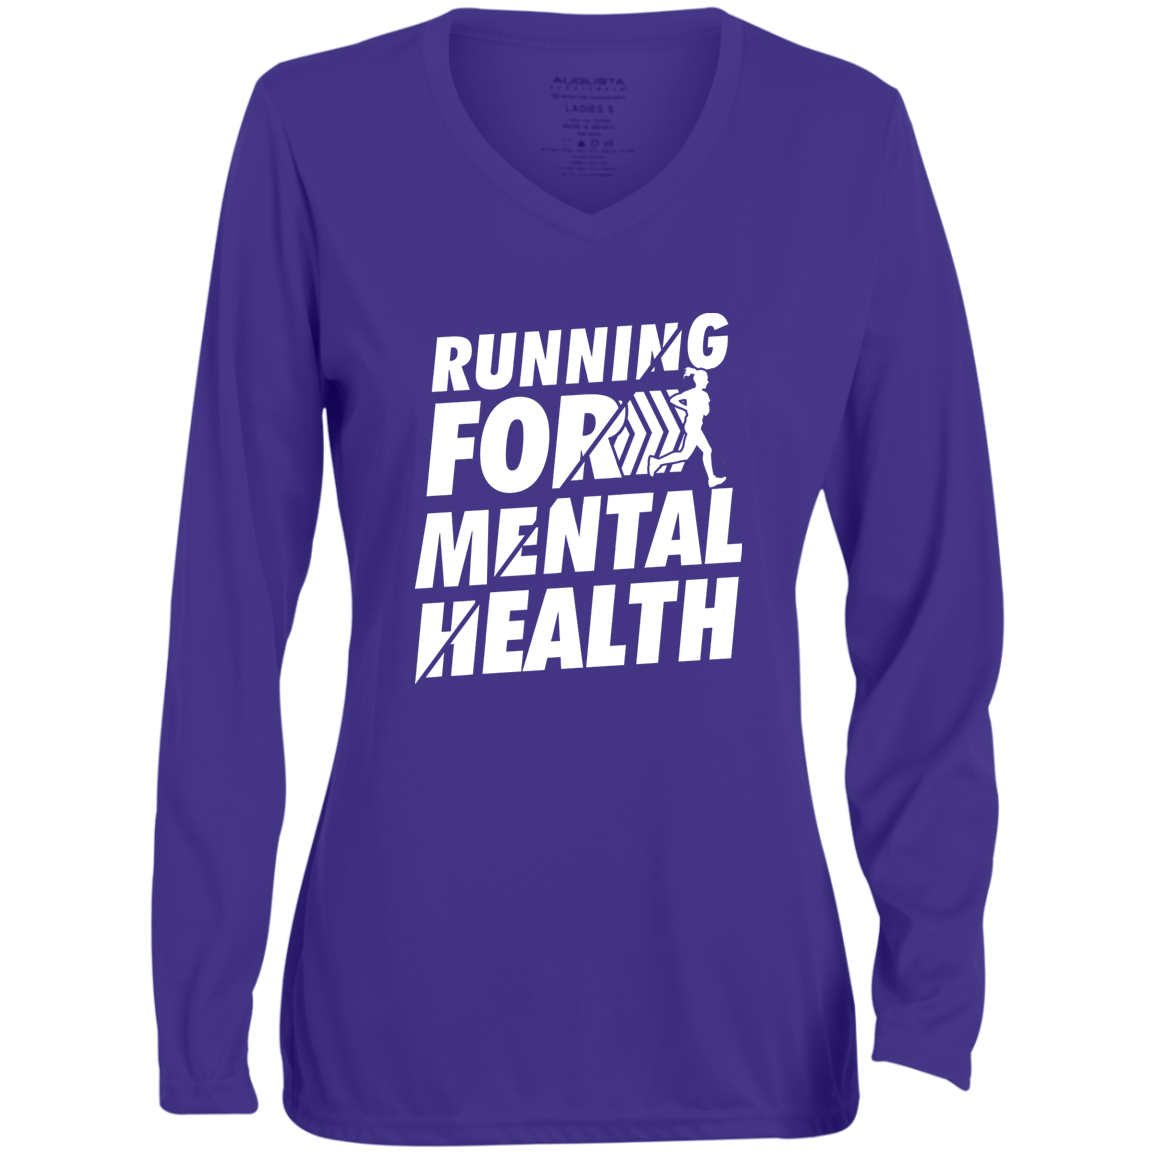 Run for Mental Health - Ladies' Moisture-Wicking Long Sleeve V-Neck Tee